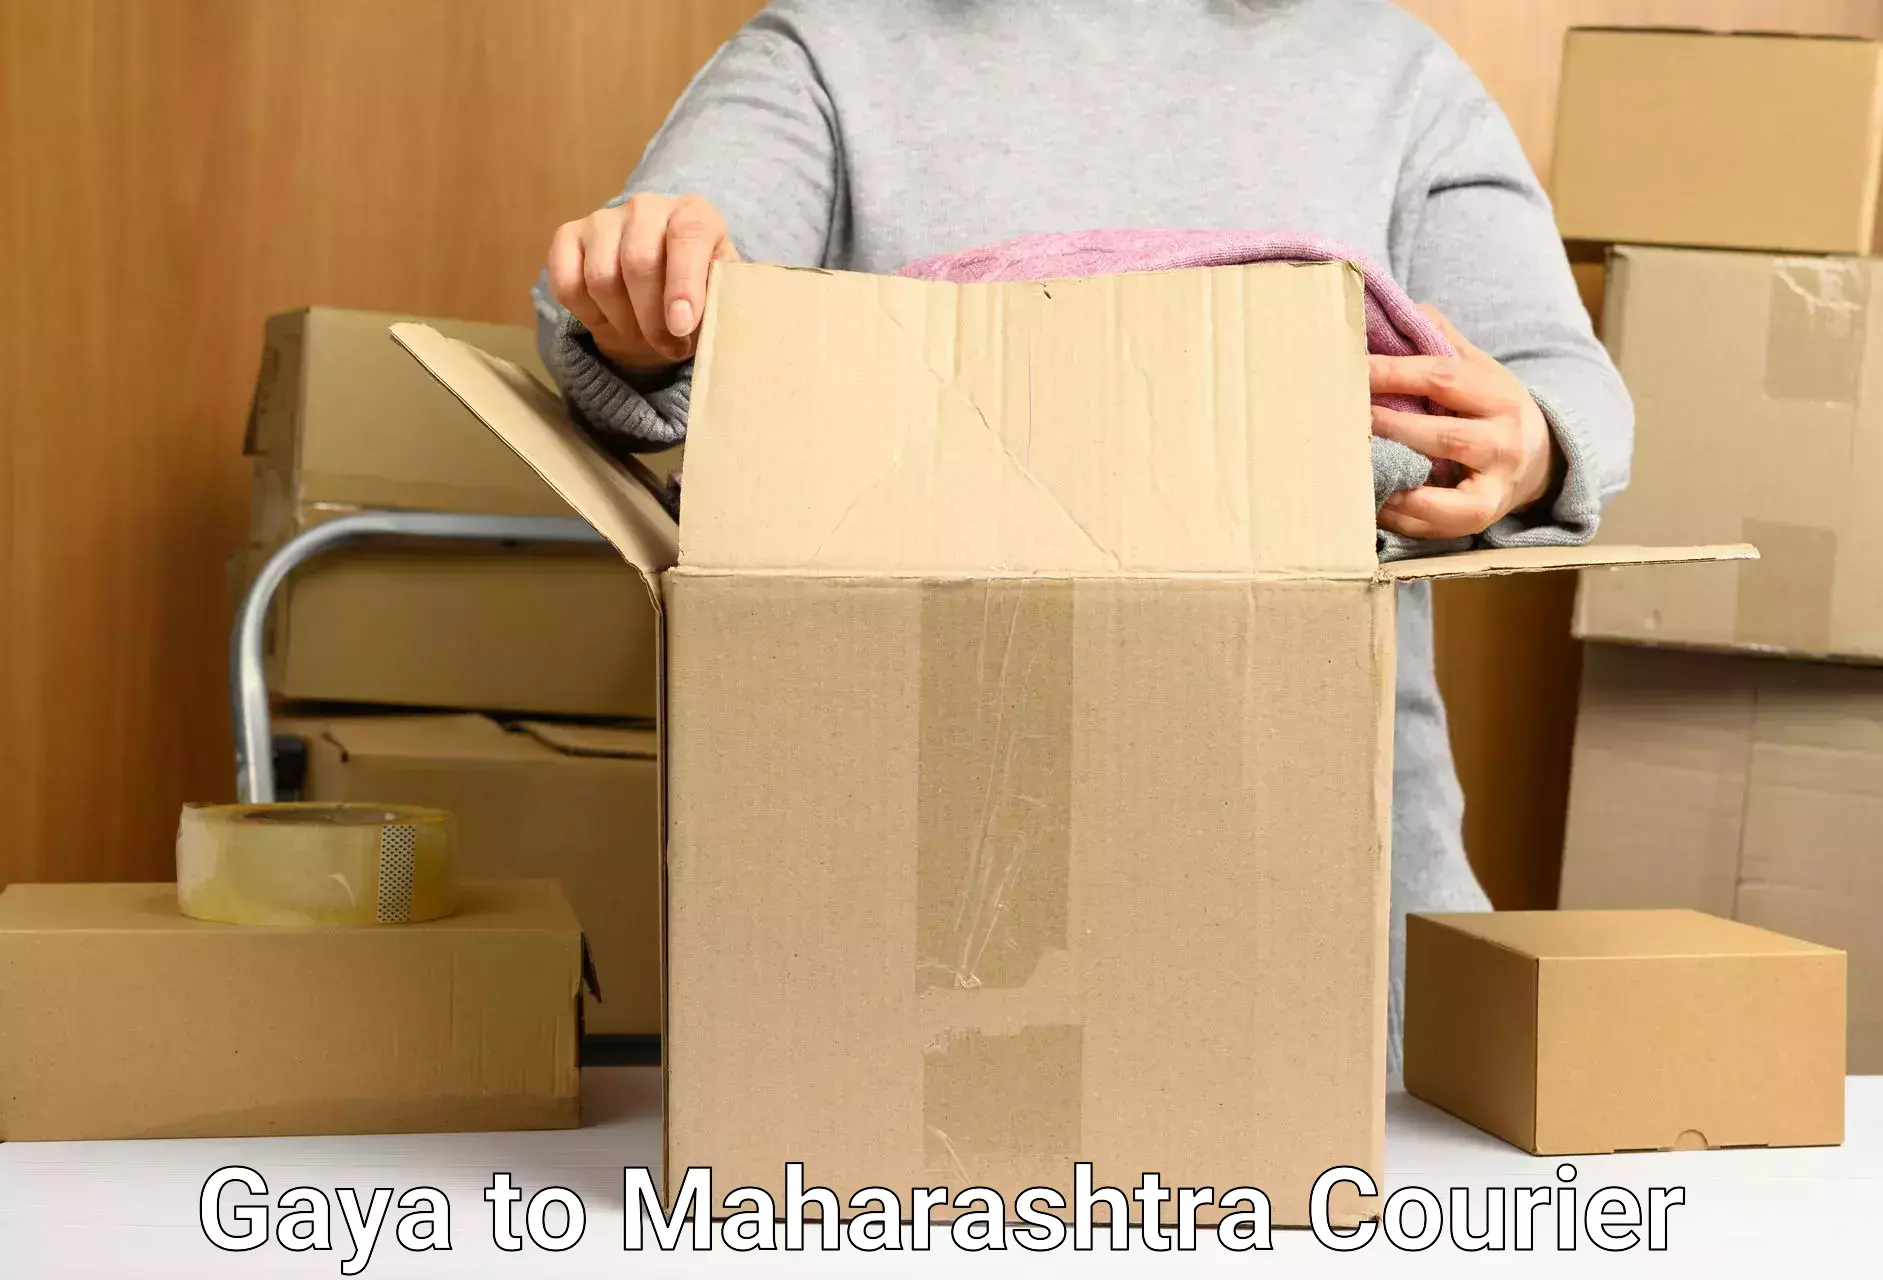 Same-day delivery solutions Gaya to Maharashtra